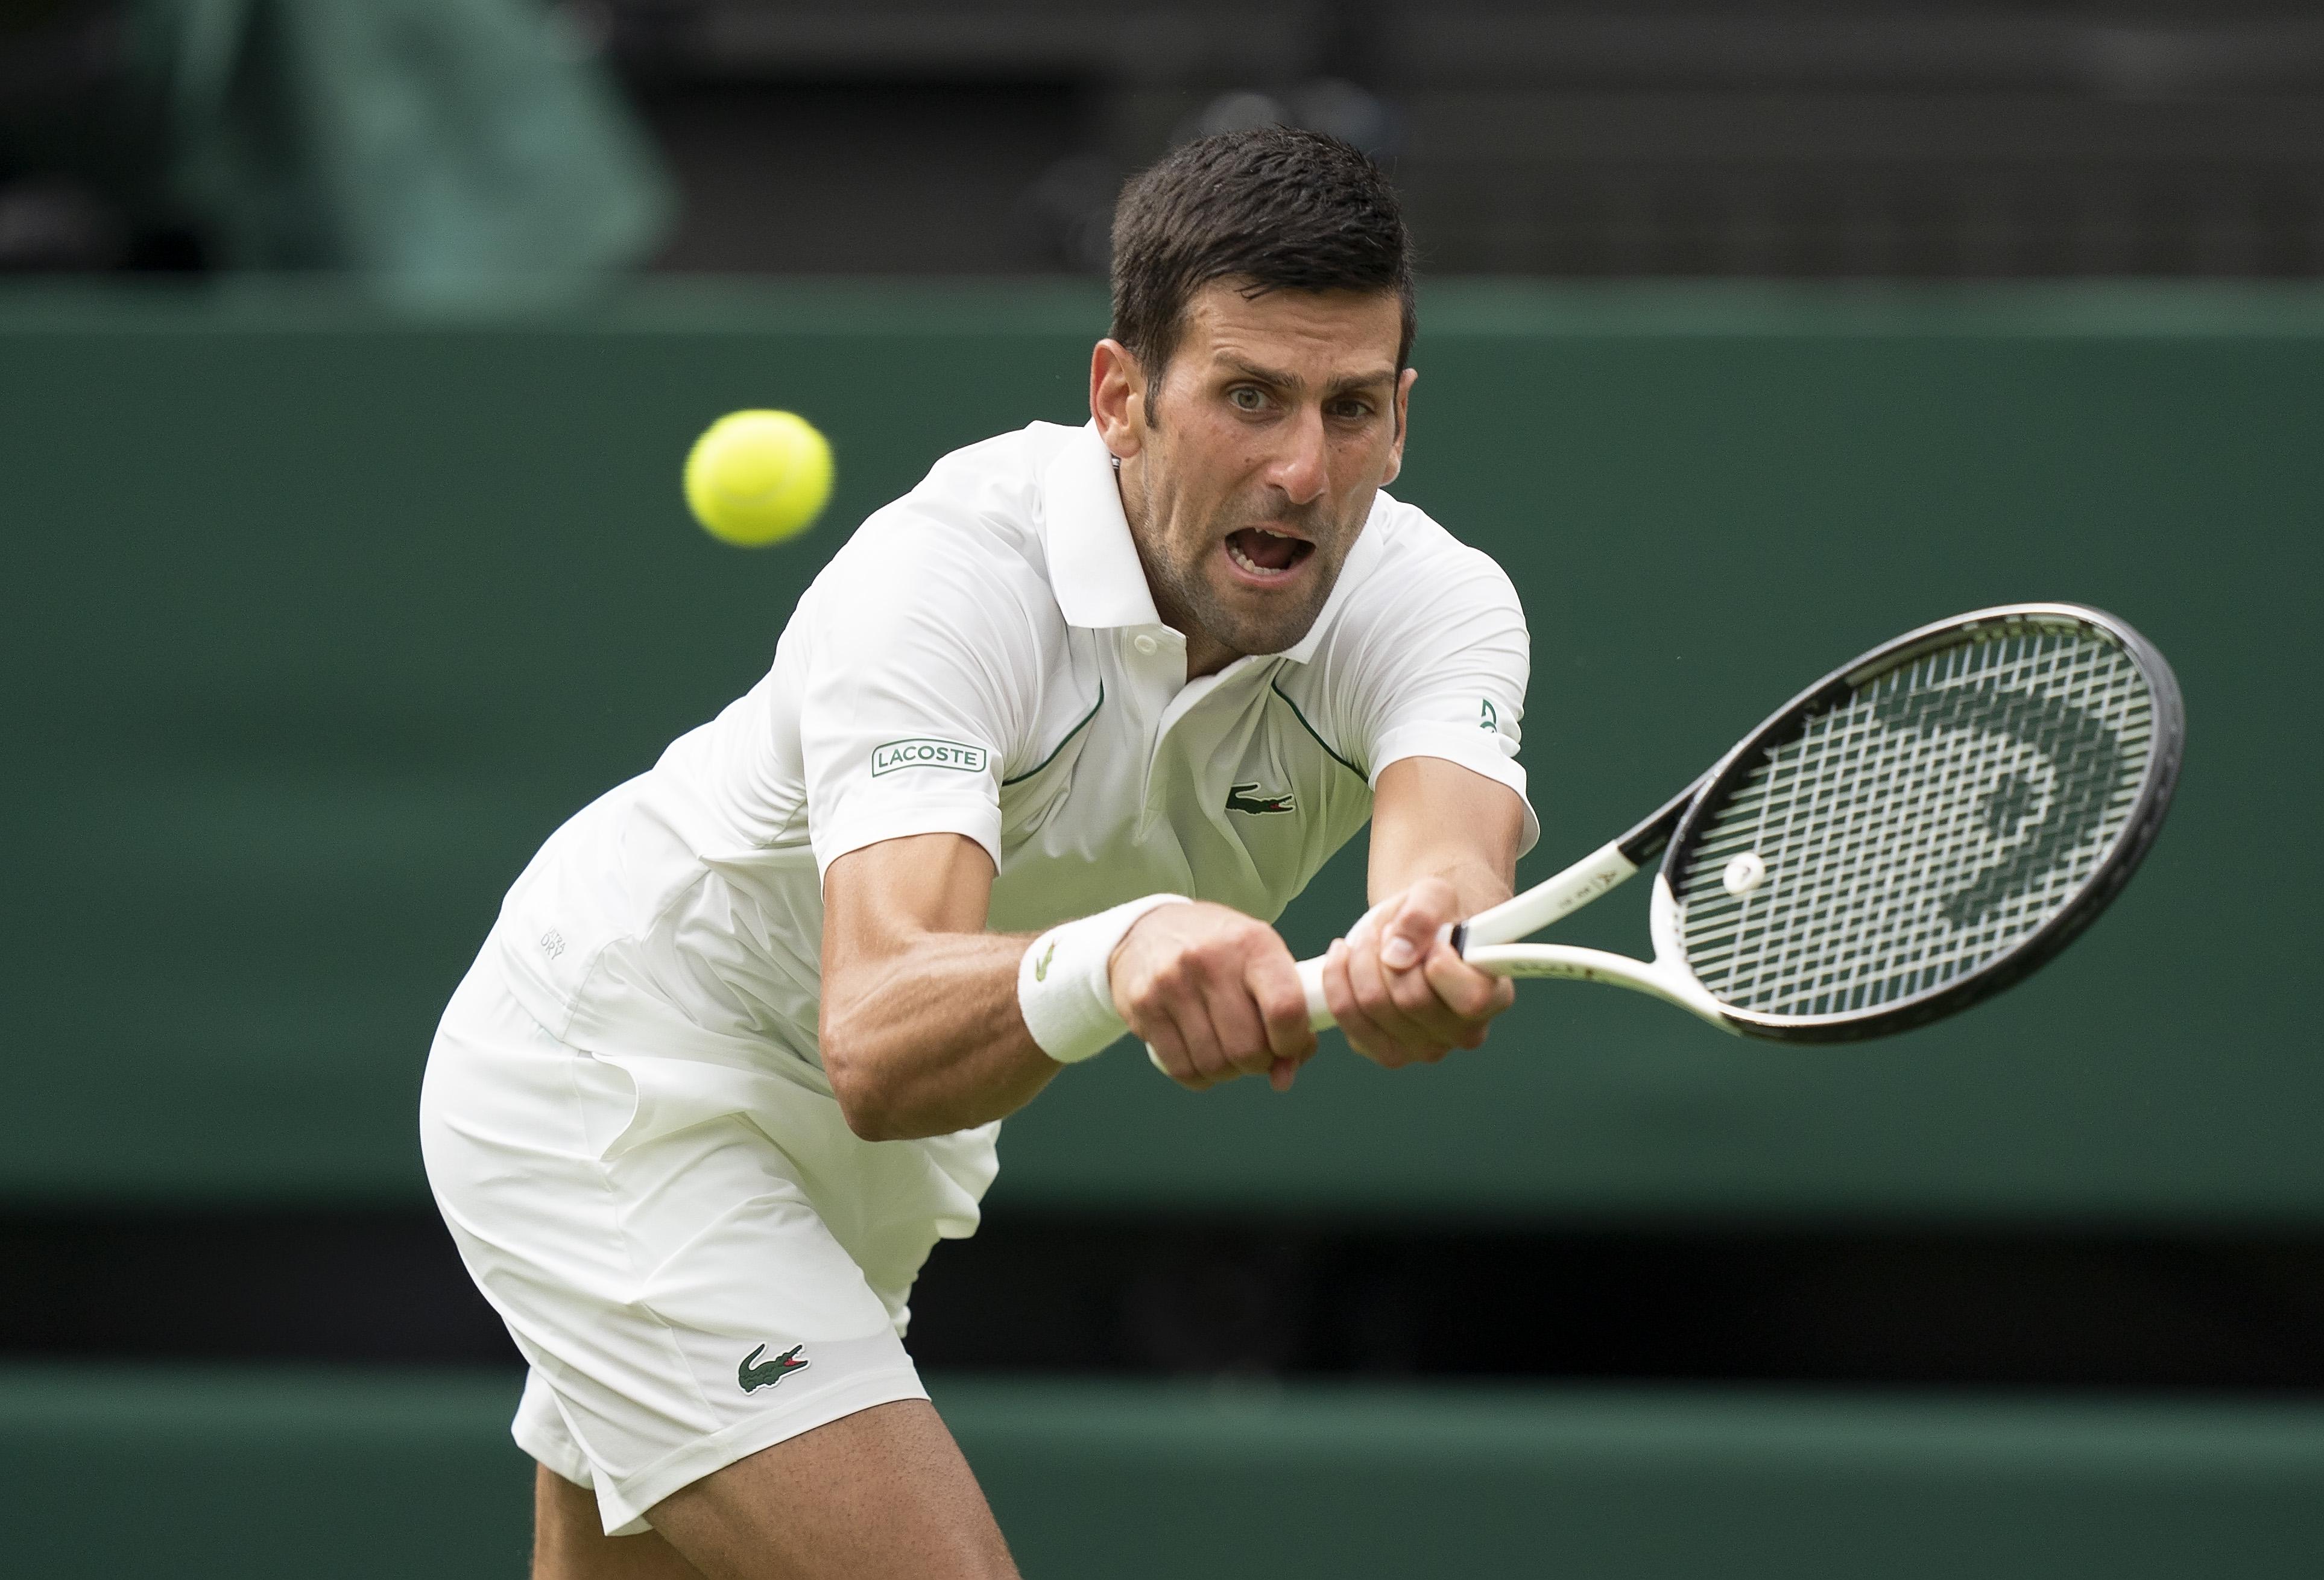 Novak Djokovic vs Thanasi Kokkinakis Odds, Prediction and Betting Trends for 2022 Wimbledon Men's Round 2 Match